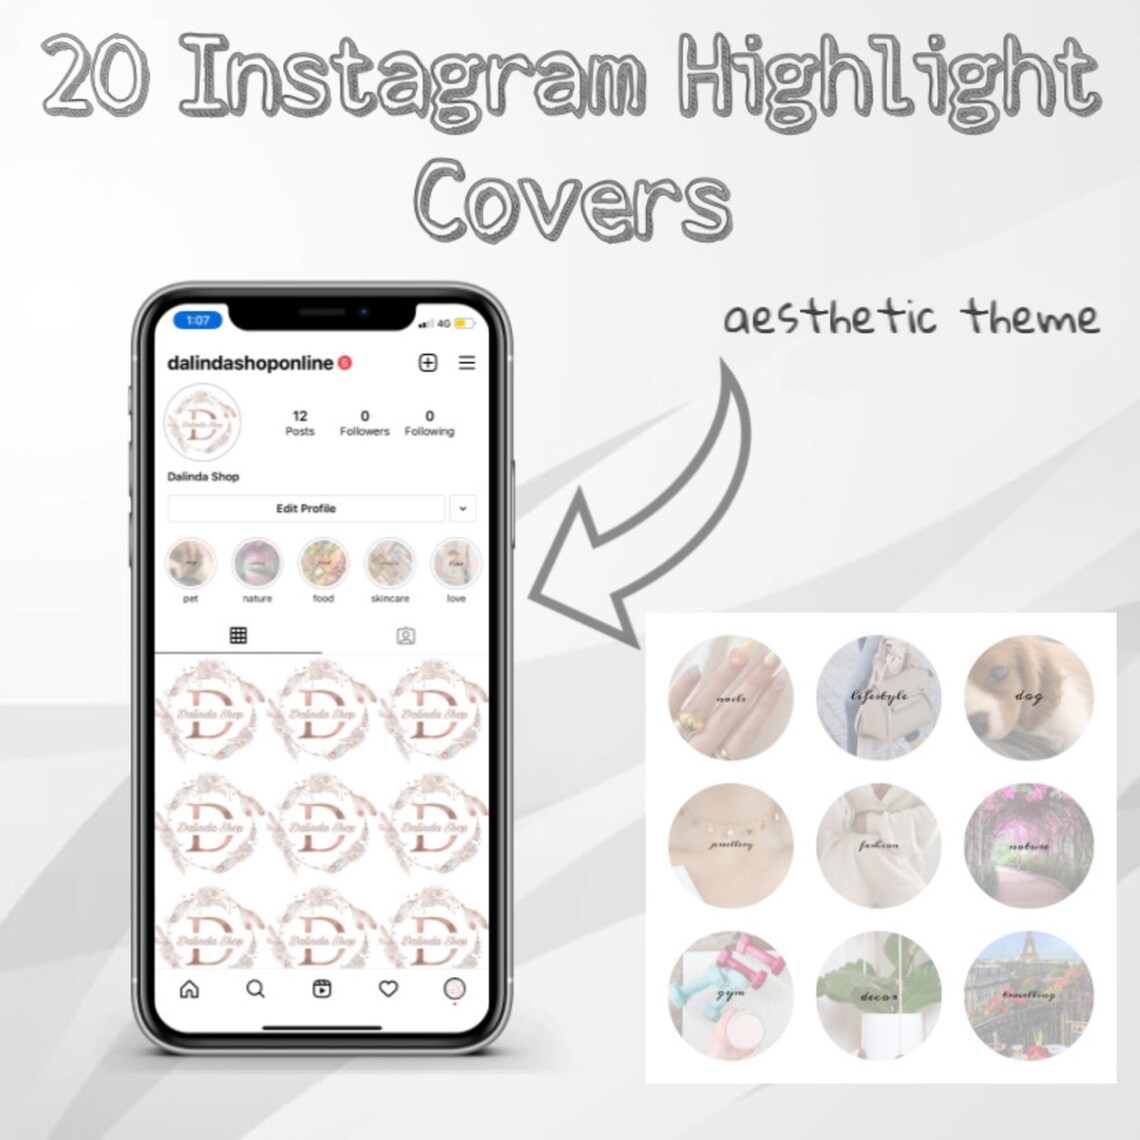 20 Instagram Highlight Covers Aesthetic Theme | Etsy